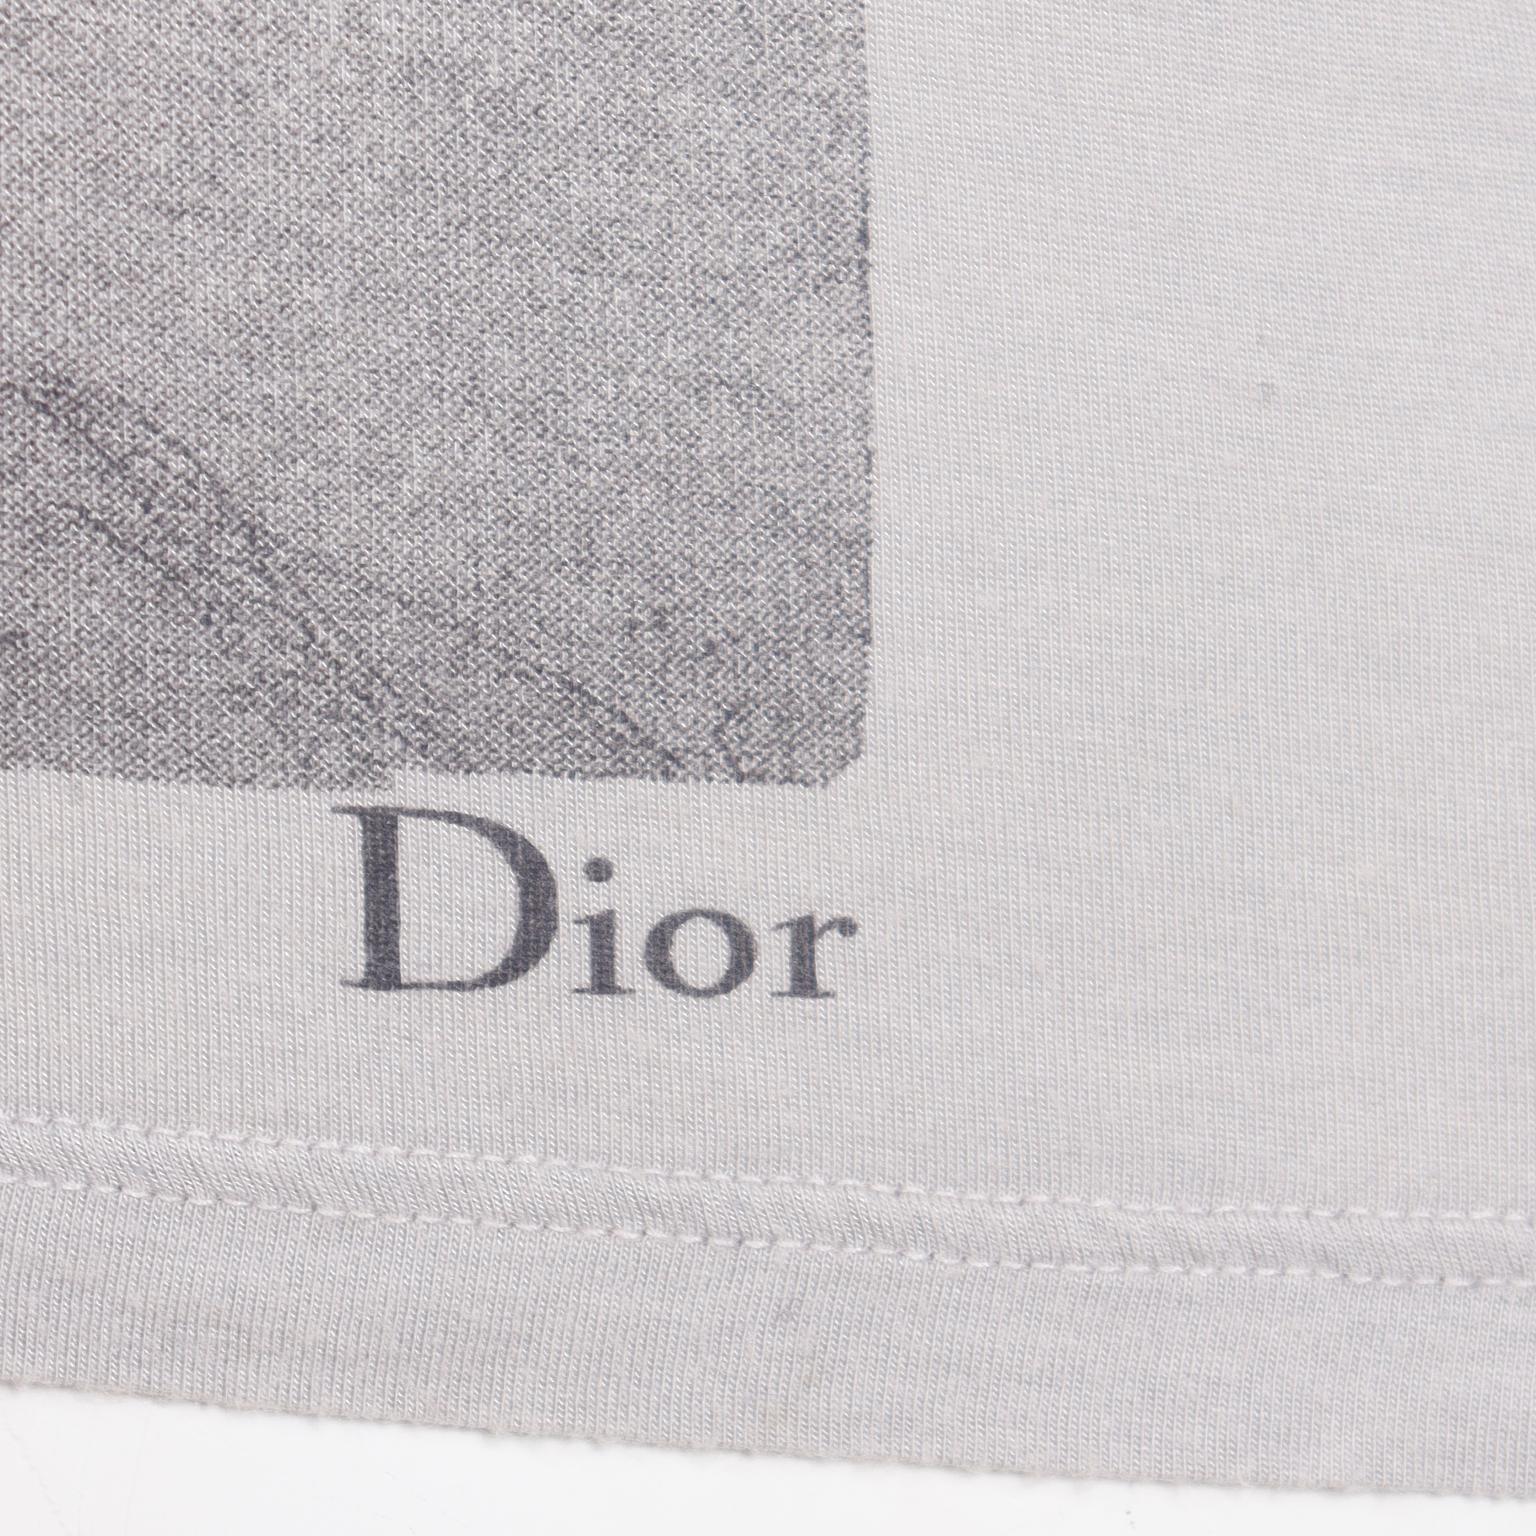 Women's Christian Dior Boutique Paris Marie Antoinette Inspired Graphic T-Shirt 2000